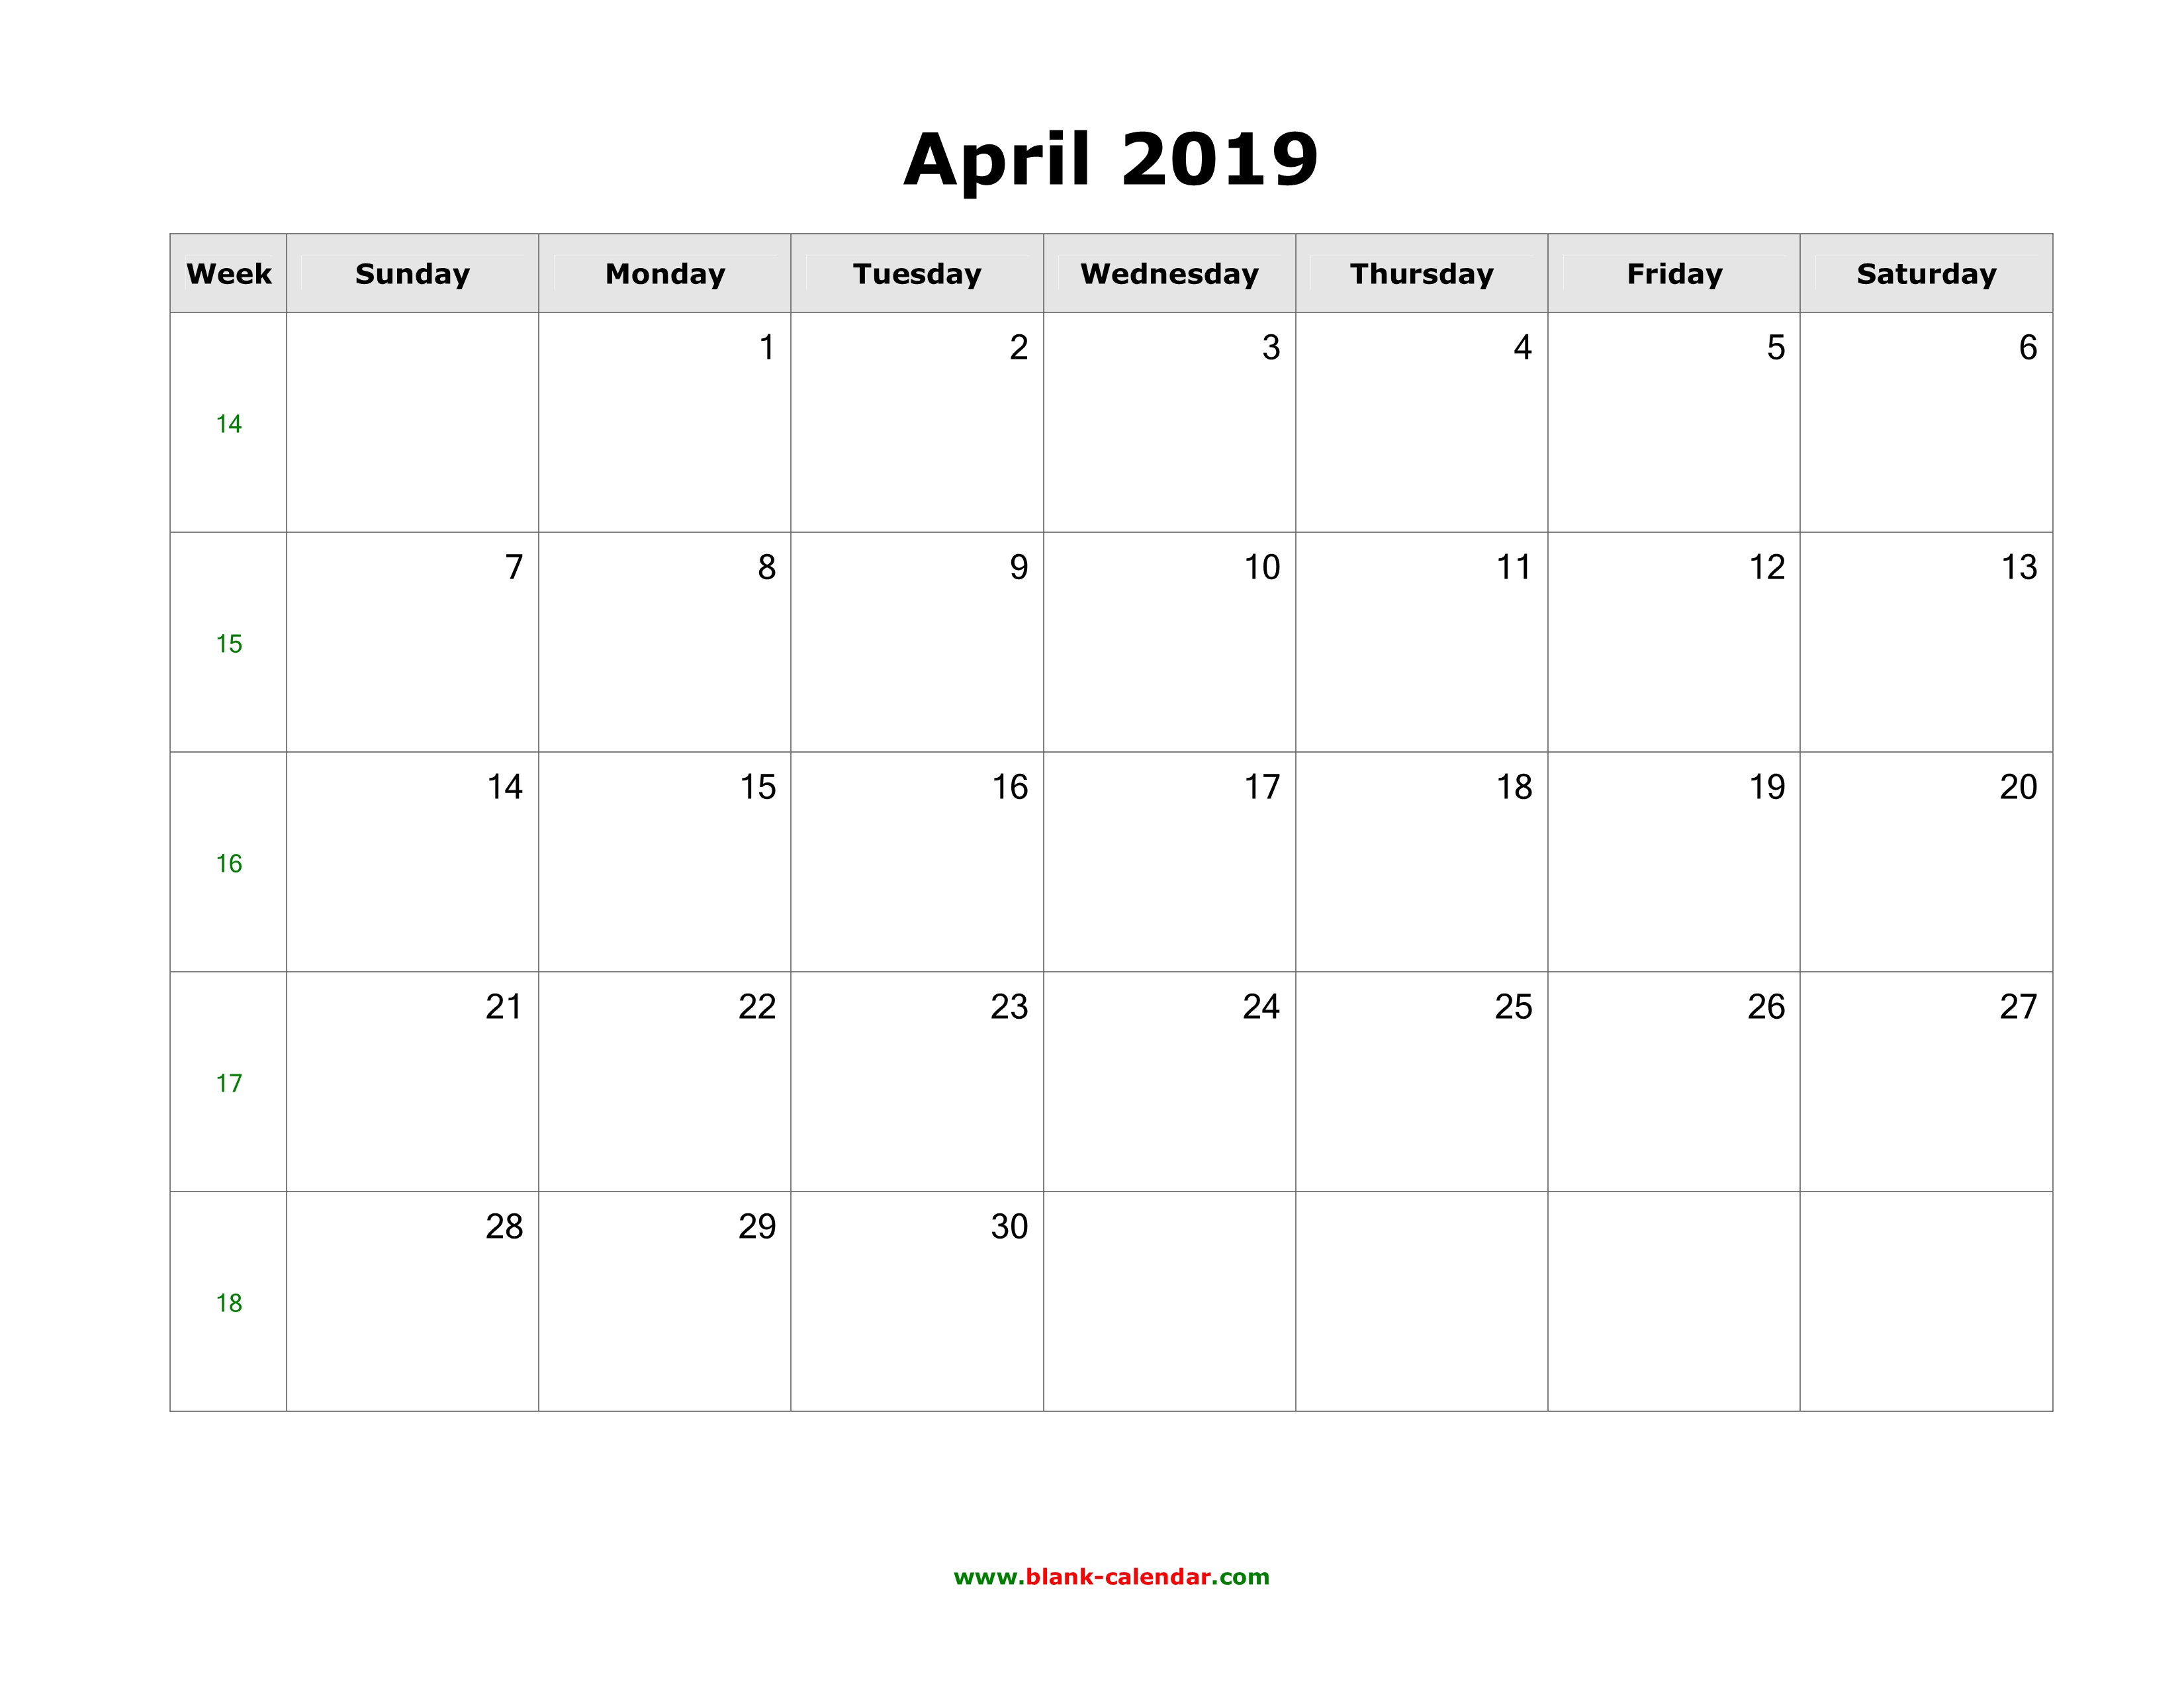 download-april-2019-blank-calendar-with-us-holidays-horizontal